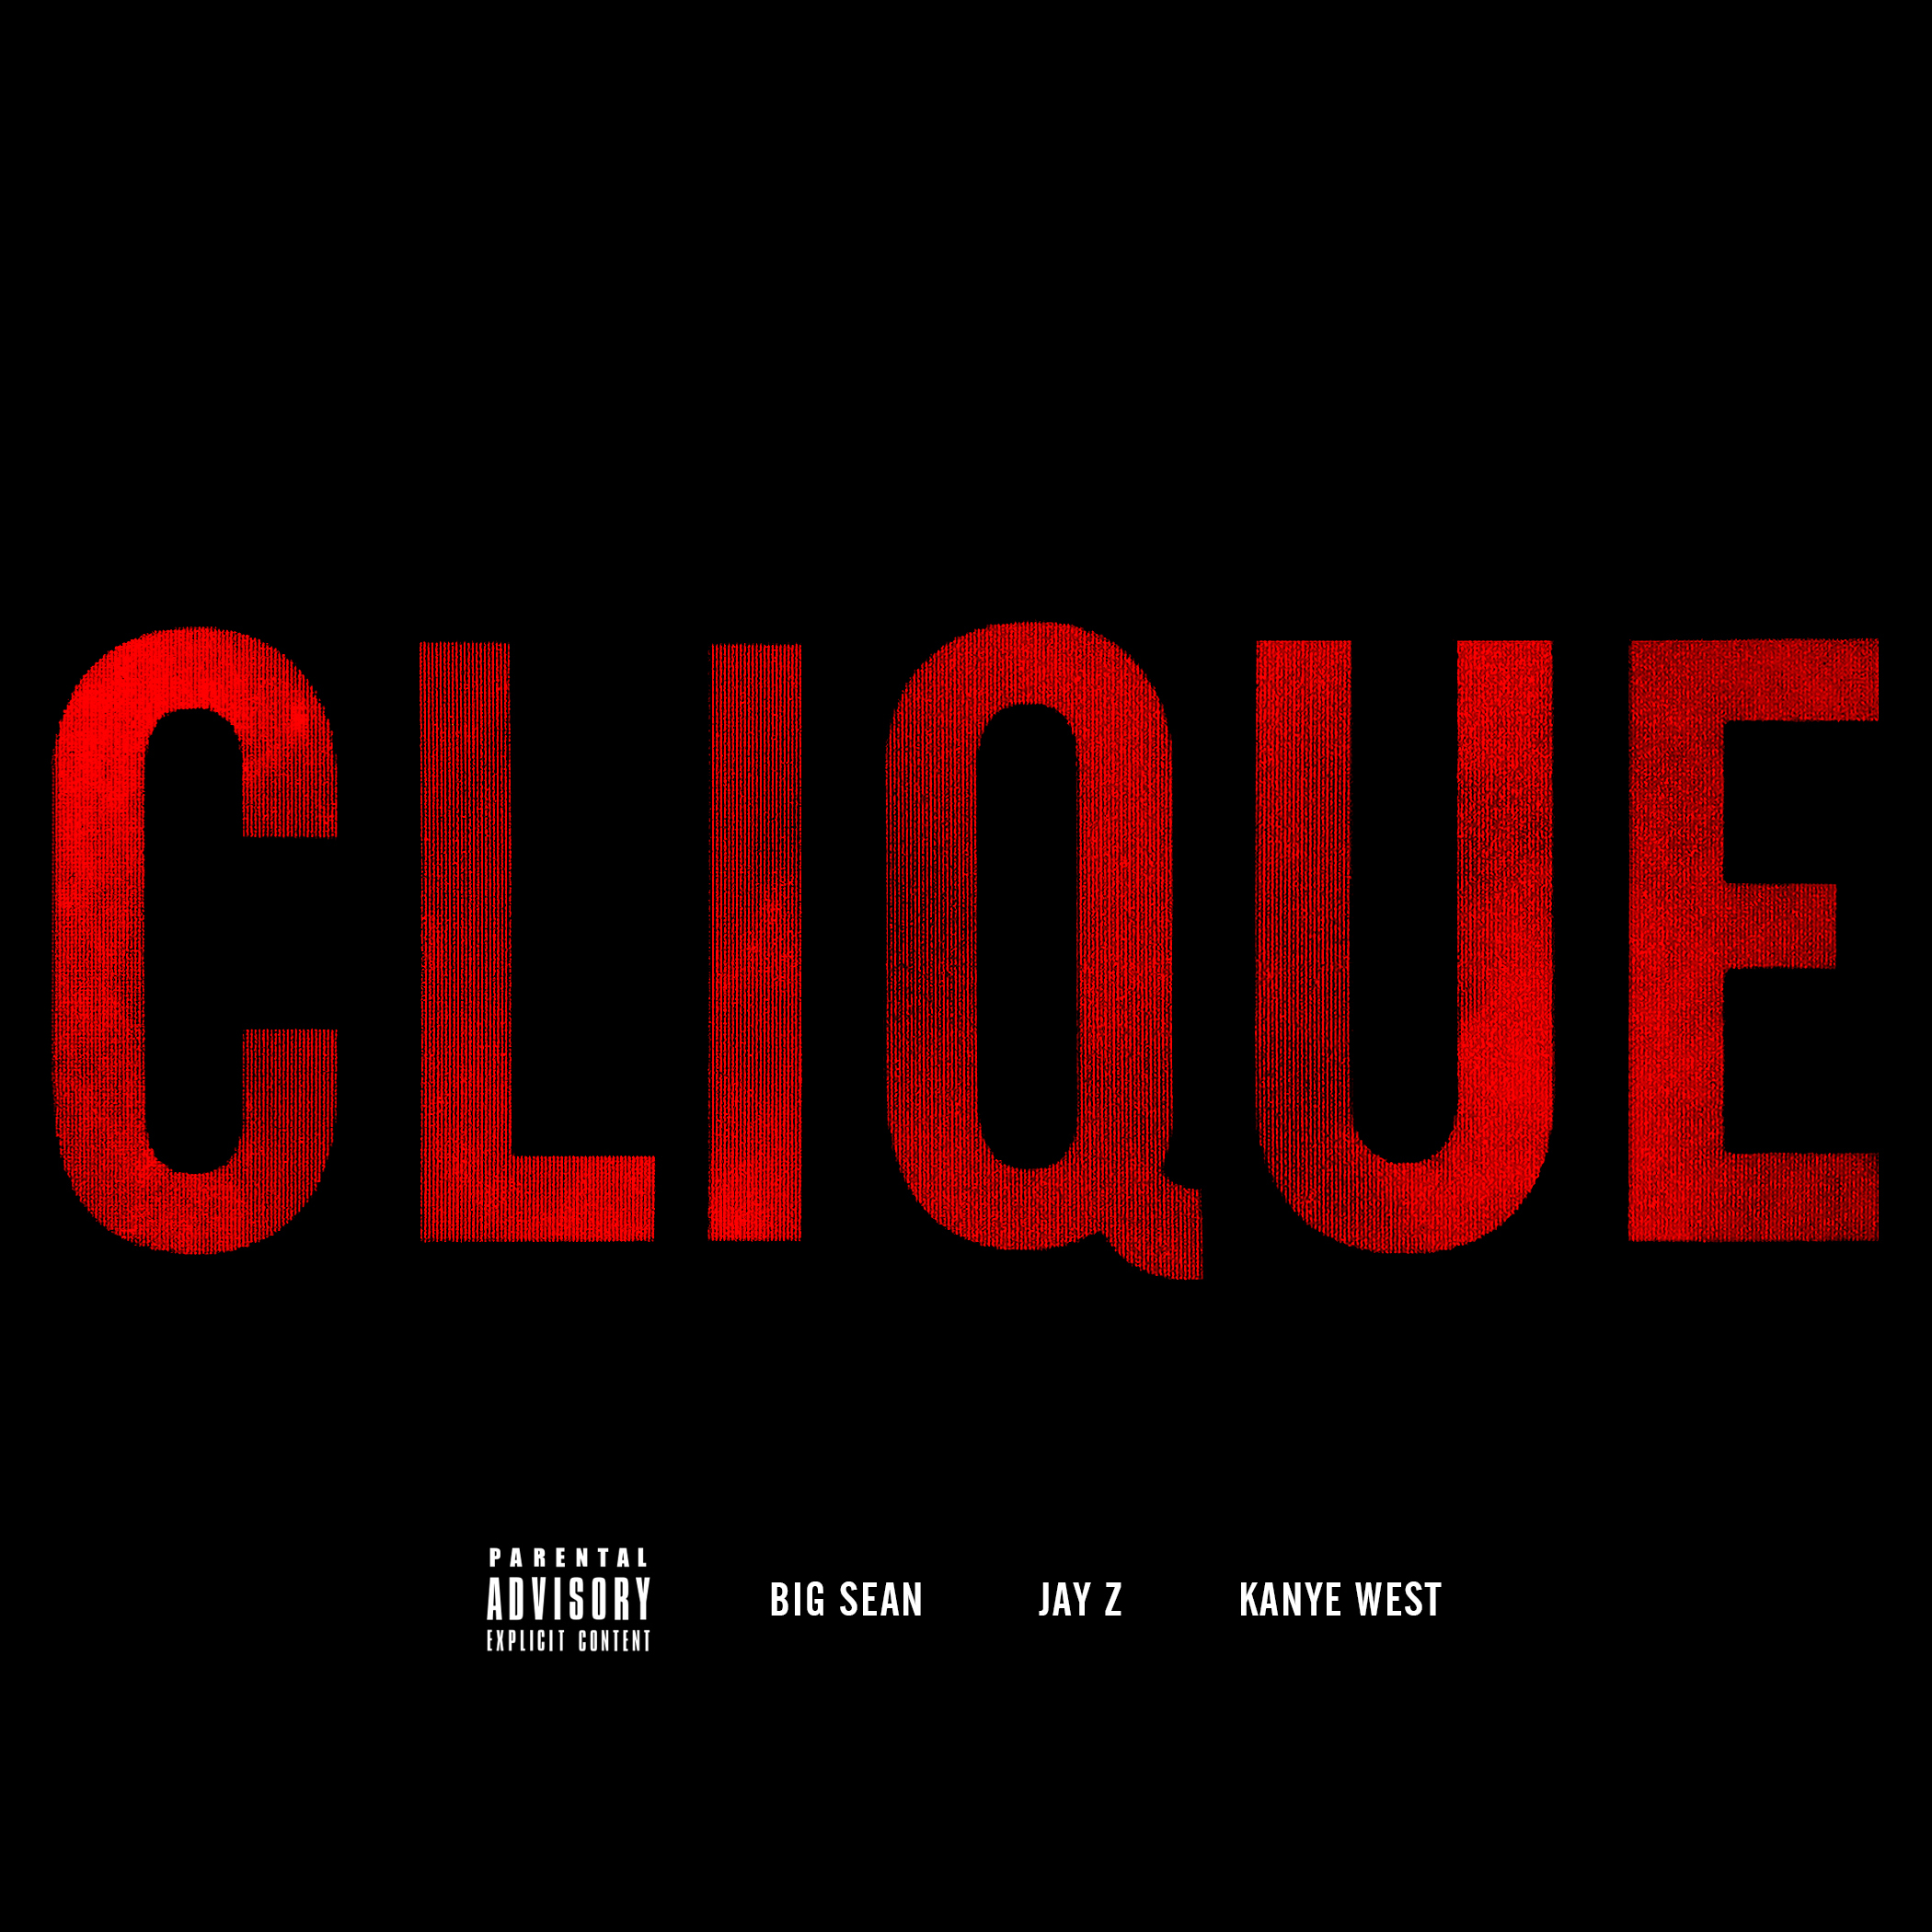 Bangs hop. Clique Kanye West. Jay z Clique. Clique Jay-z-big Sean-Kanye. Clique Jay z обложка.